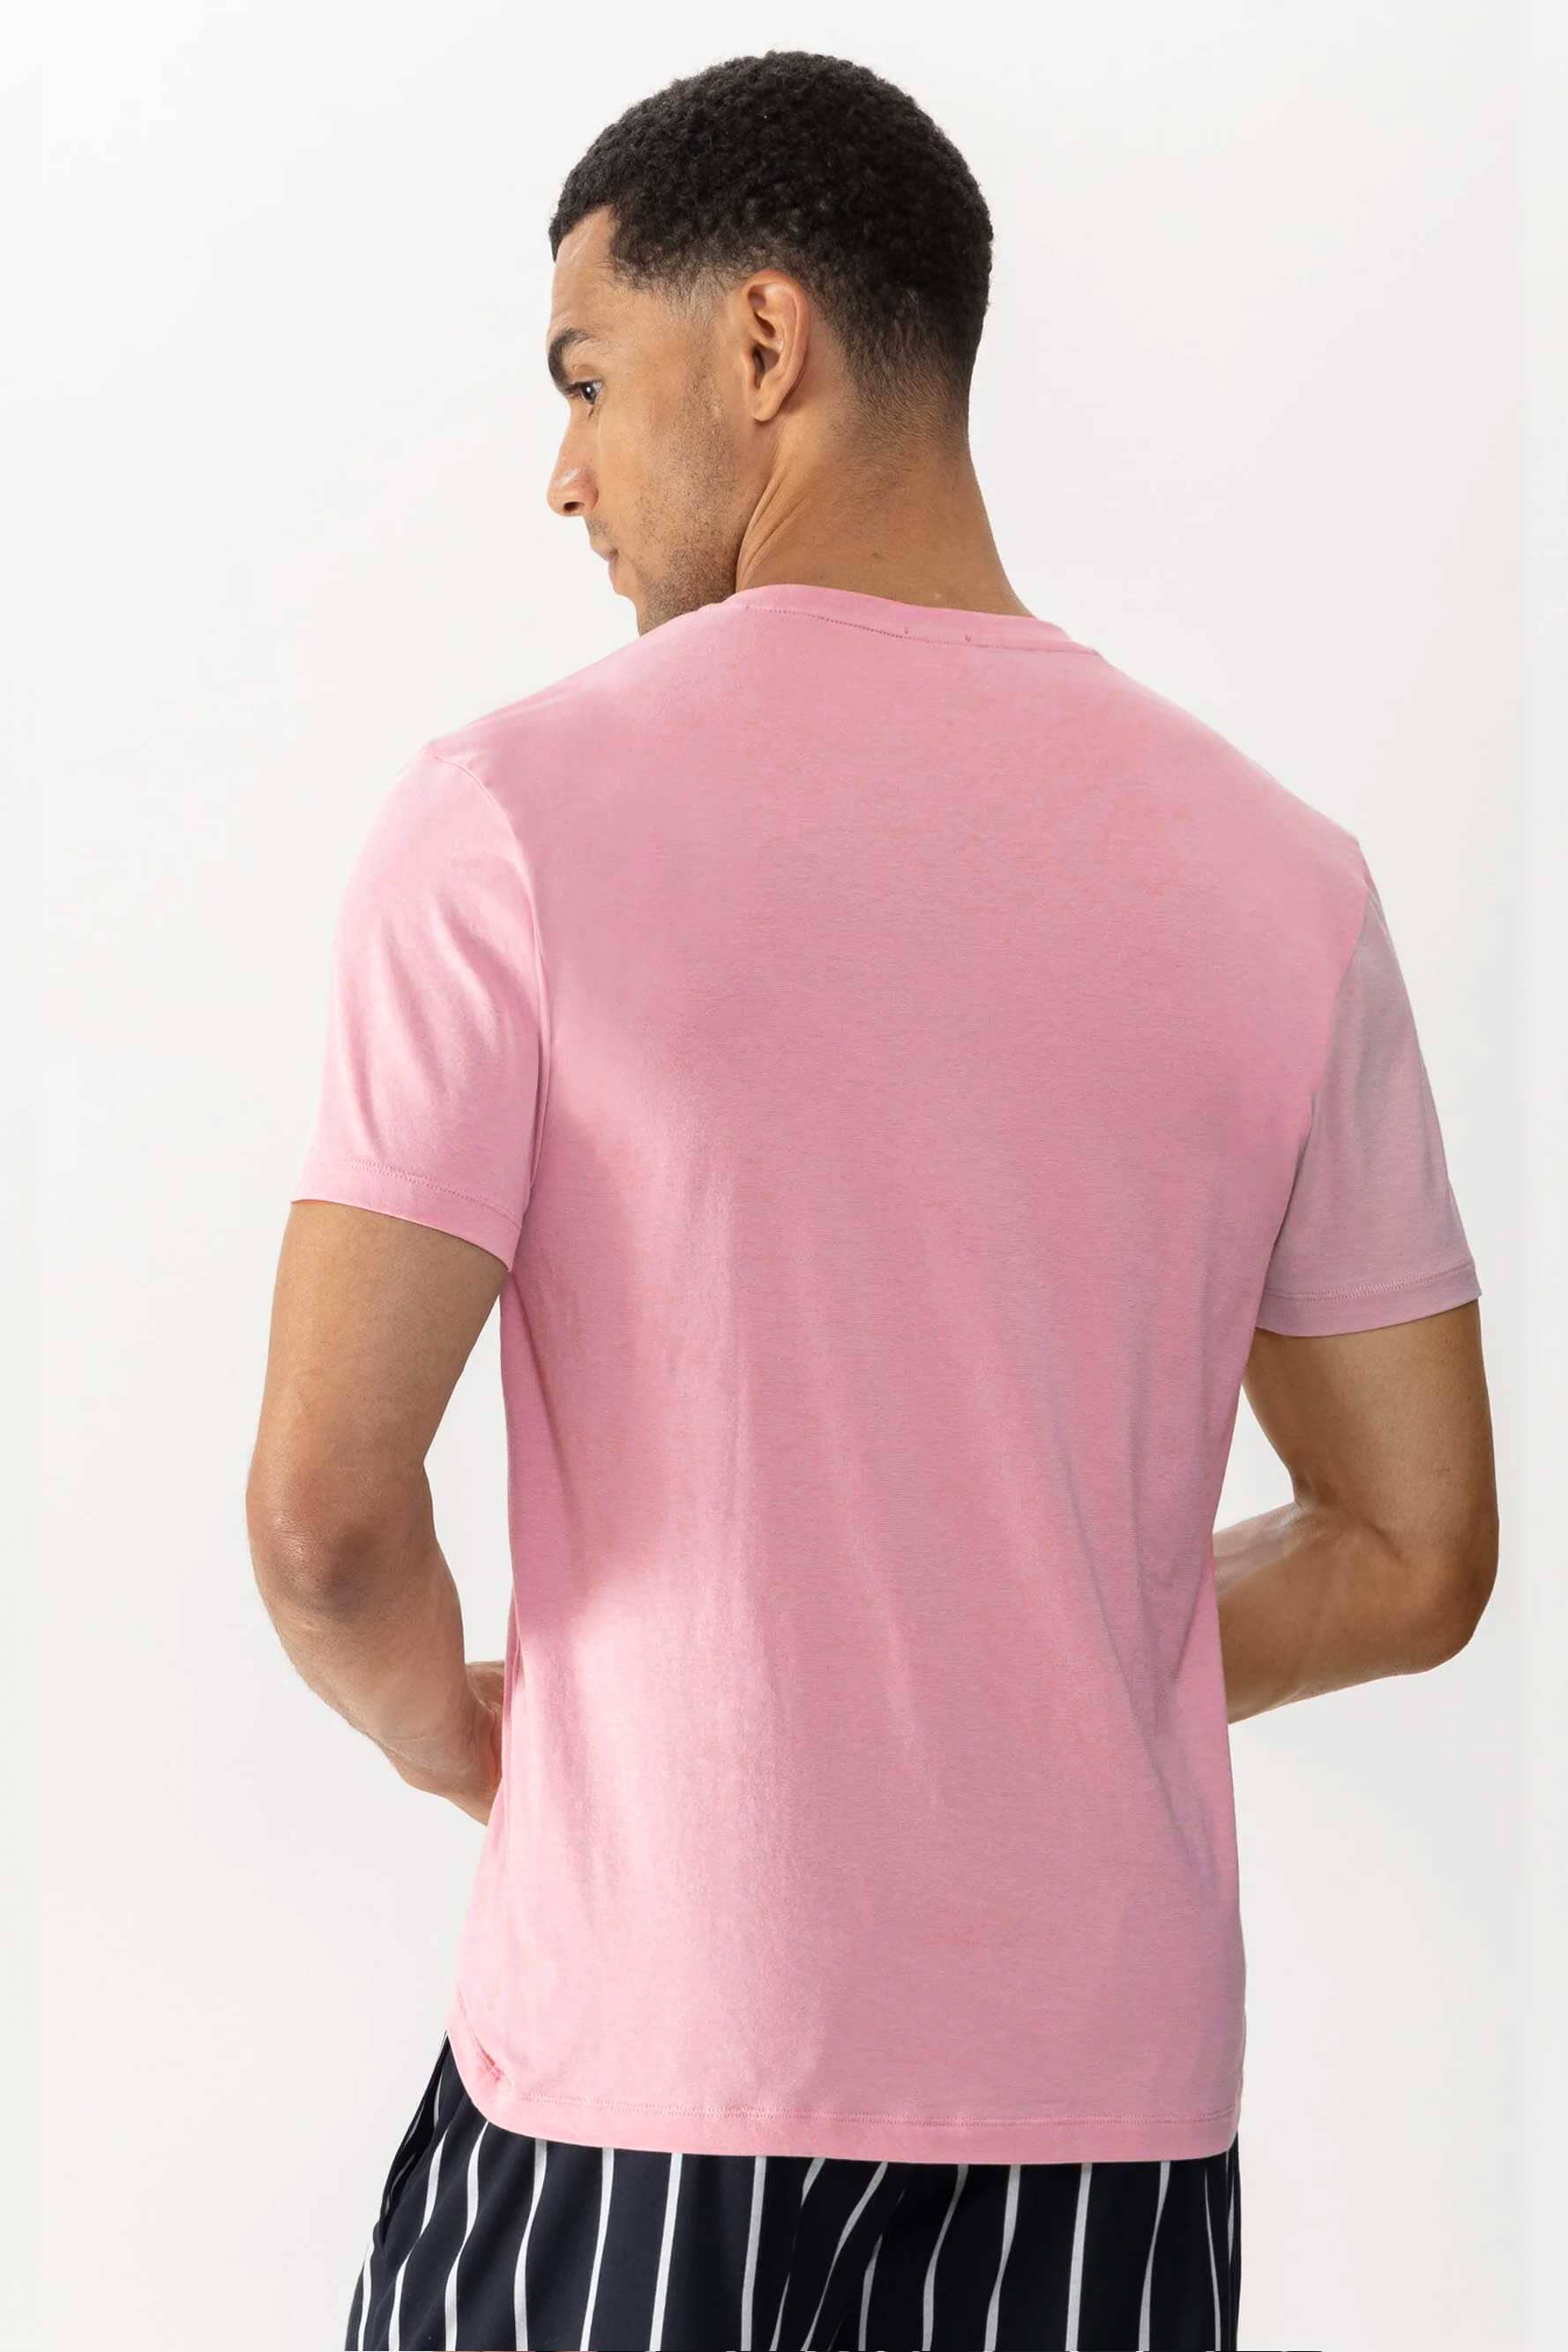 Beverly Hills Men's Short Sleeve Classic Tee Shirt Men's Tee Shirt Syed Adeel Zafar 